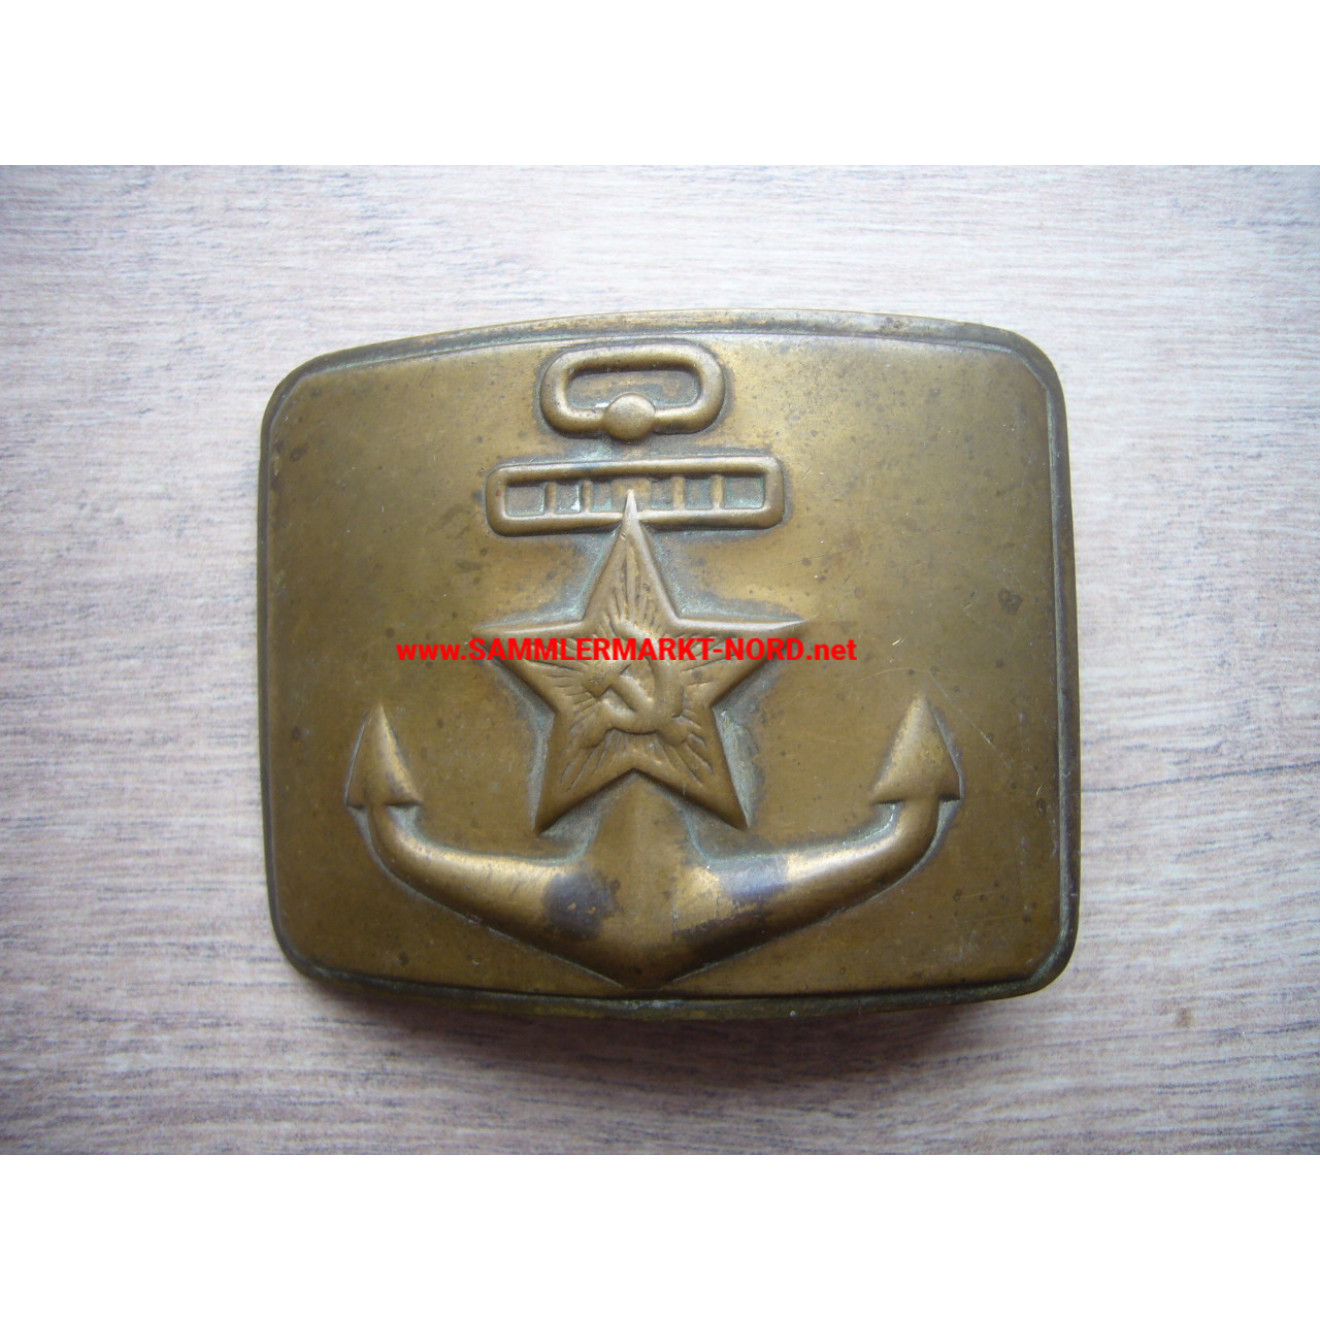 Russia / Soviet Union - Navy belt buckle (large)